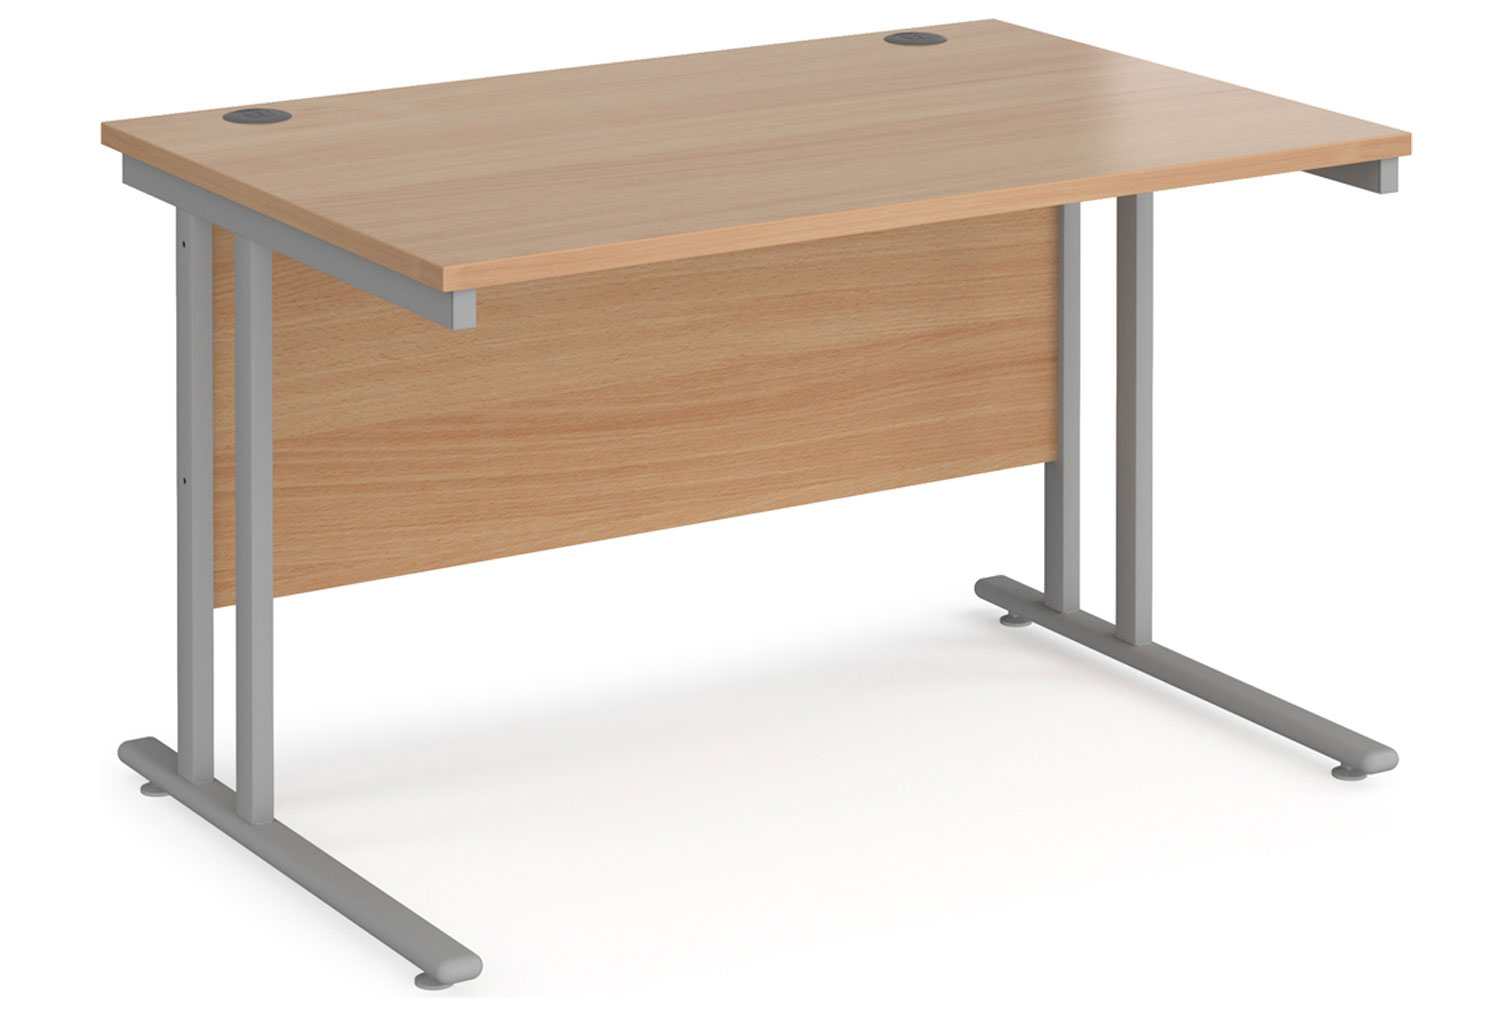 Value Line Deluxe C-Leg Rectangular Office Desk (Silver Legs), 120wx80dx73h (cm), Beech